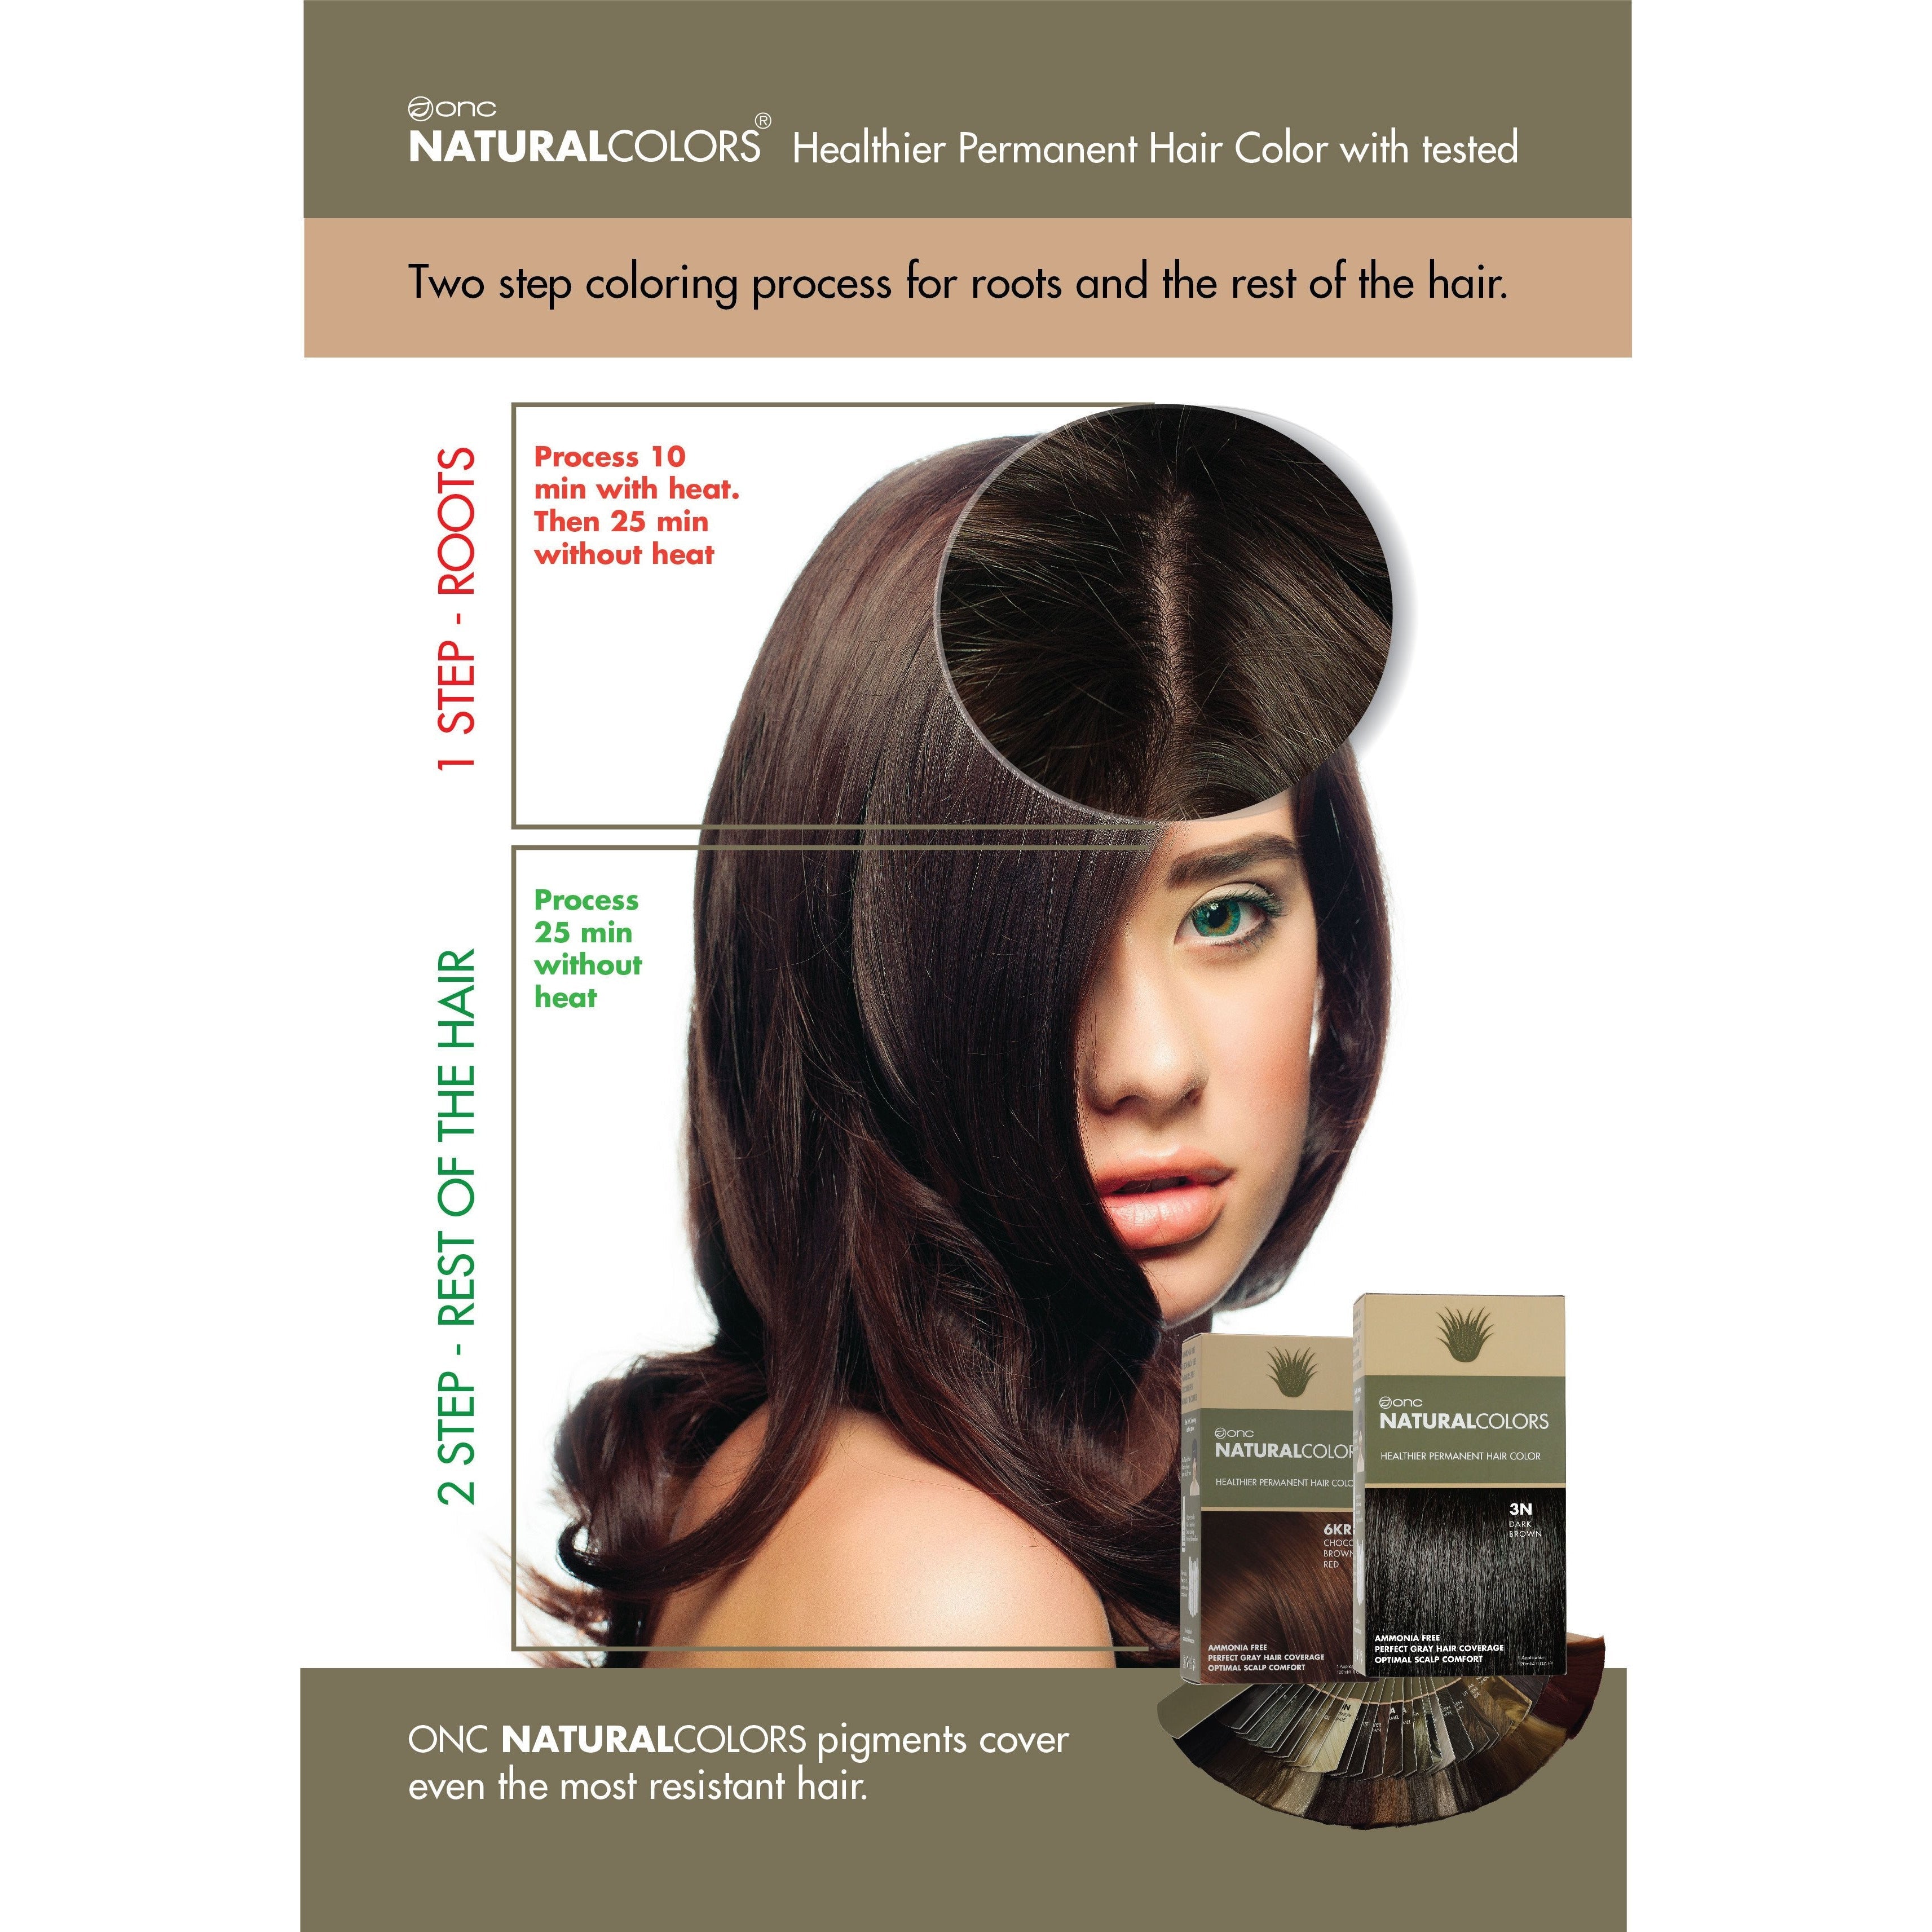 7RN Irish Red Heat Activated Hair Dye With Organic Ingredients - 120 ml (4 fl. oz)